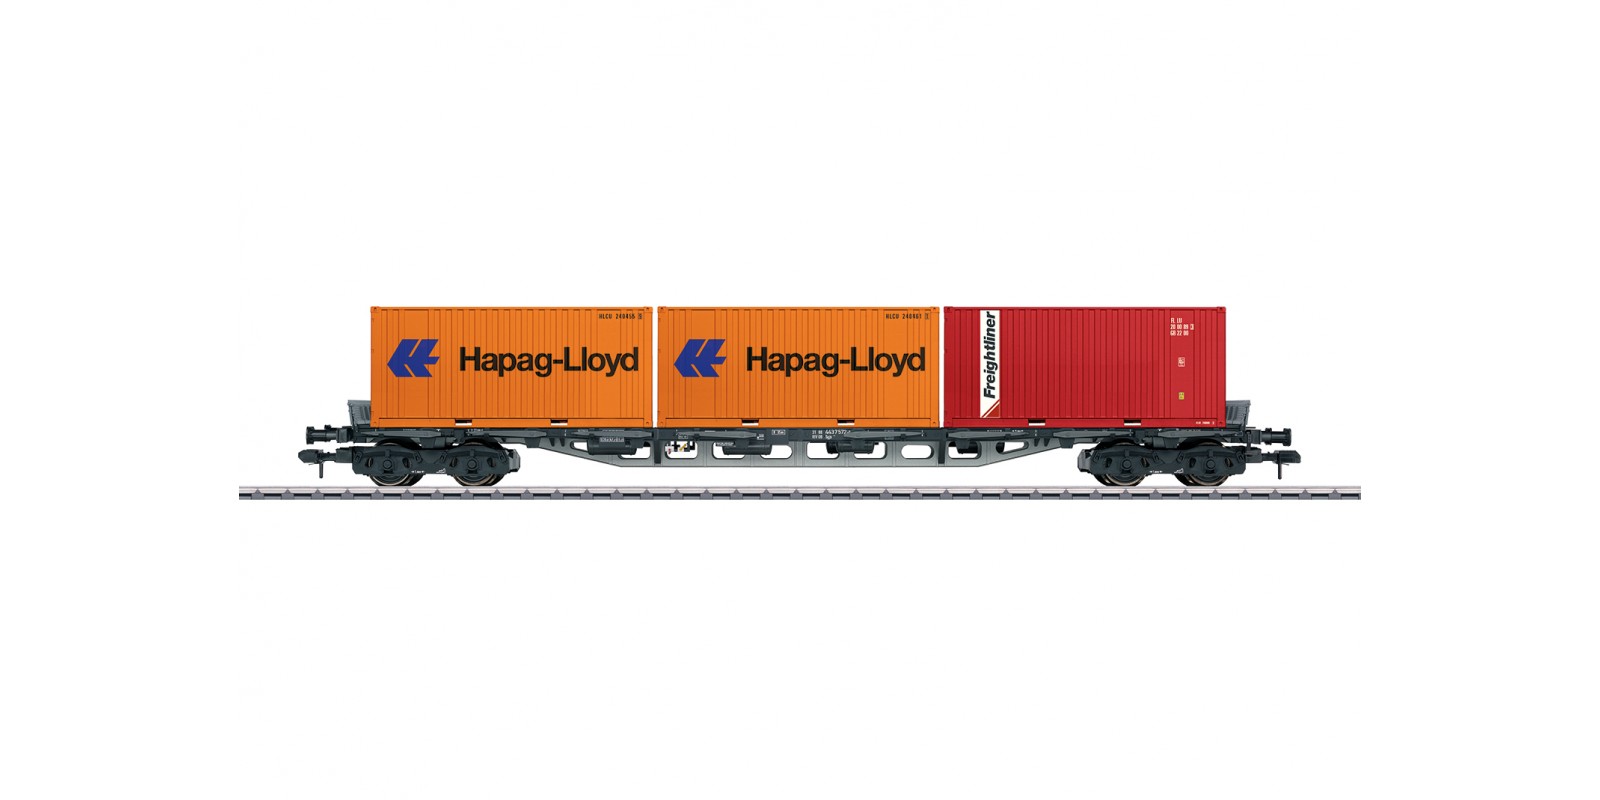 58715 Type Sgjs 716 General-Purpose Container Transport Car